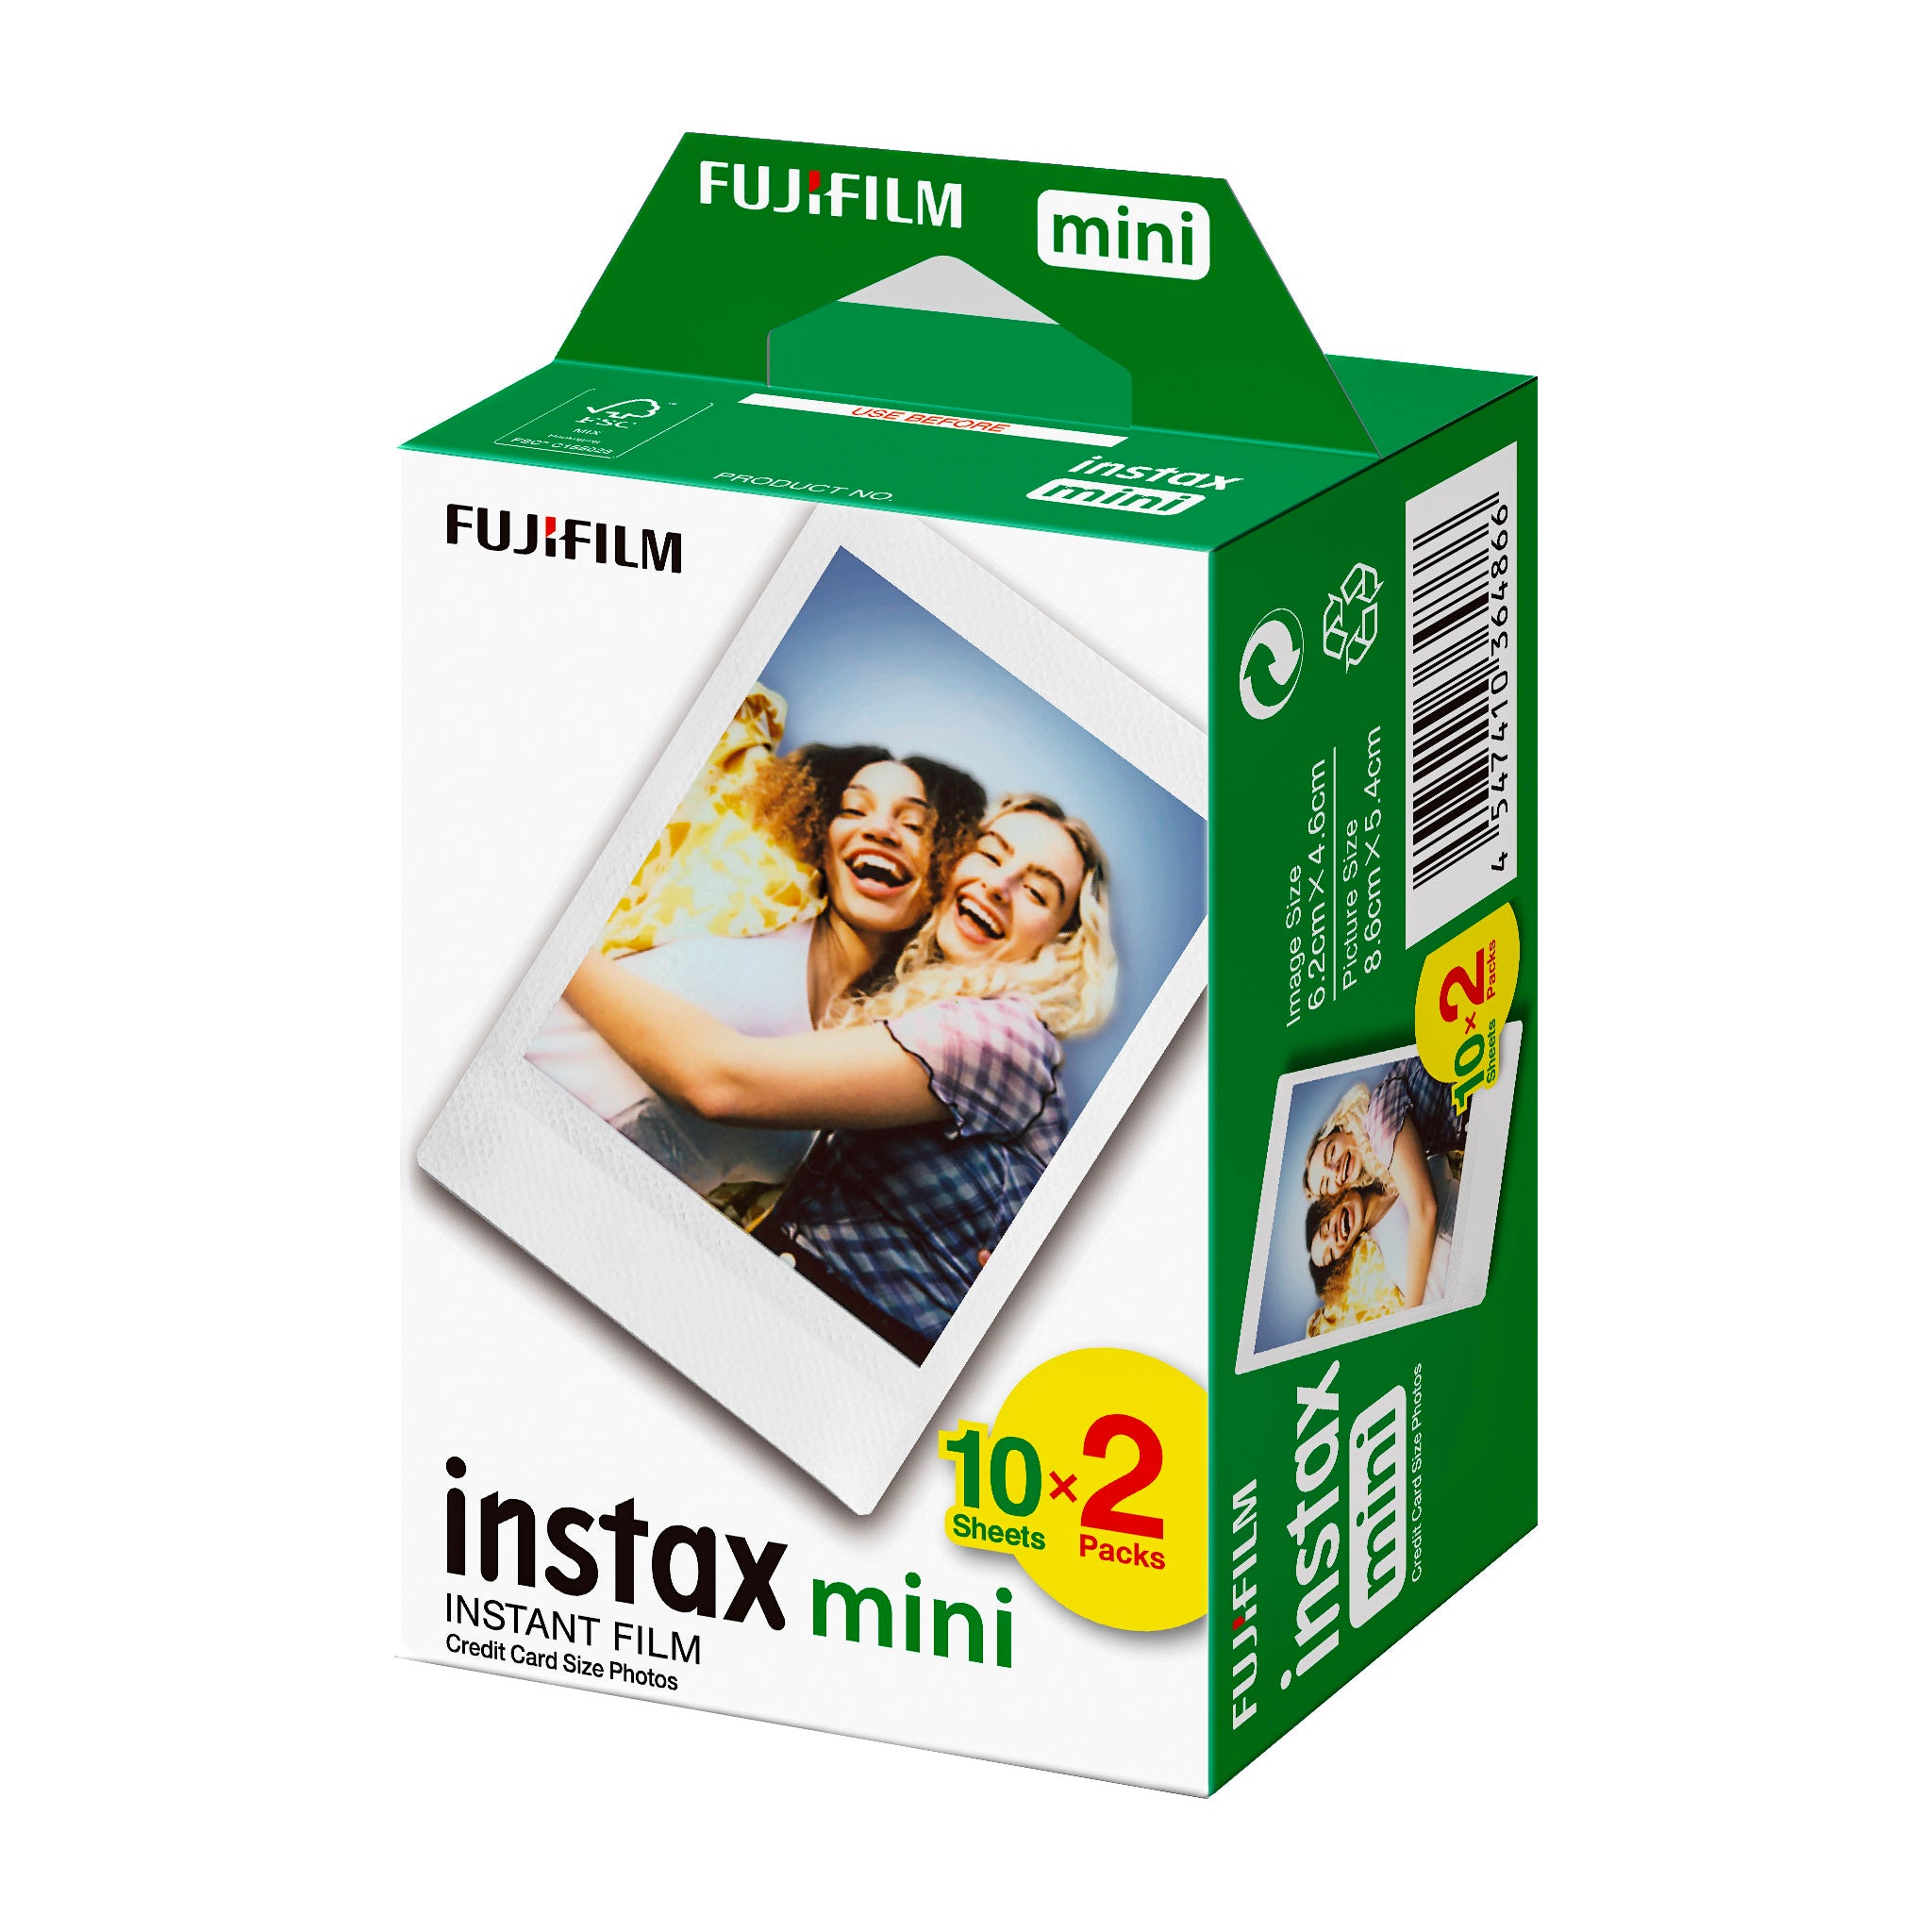 Fujifilm INSTAX Mini Evo Hybrid Instant Camera - Film Bundle